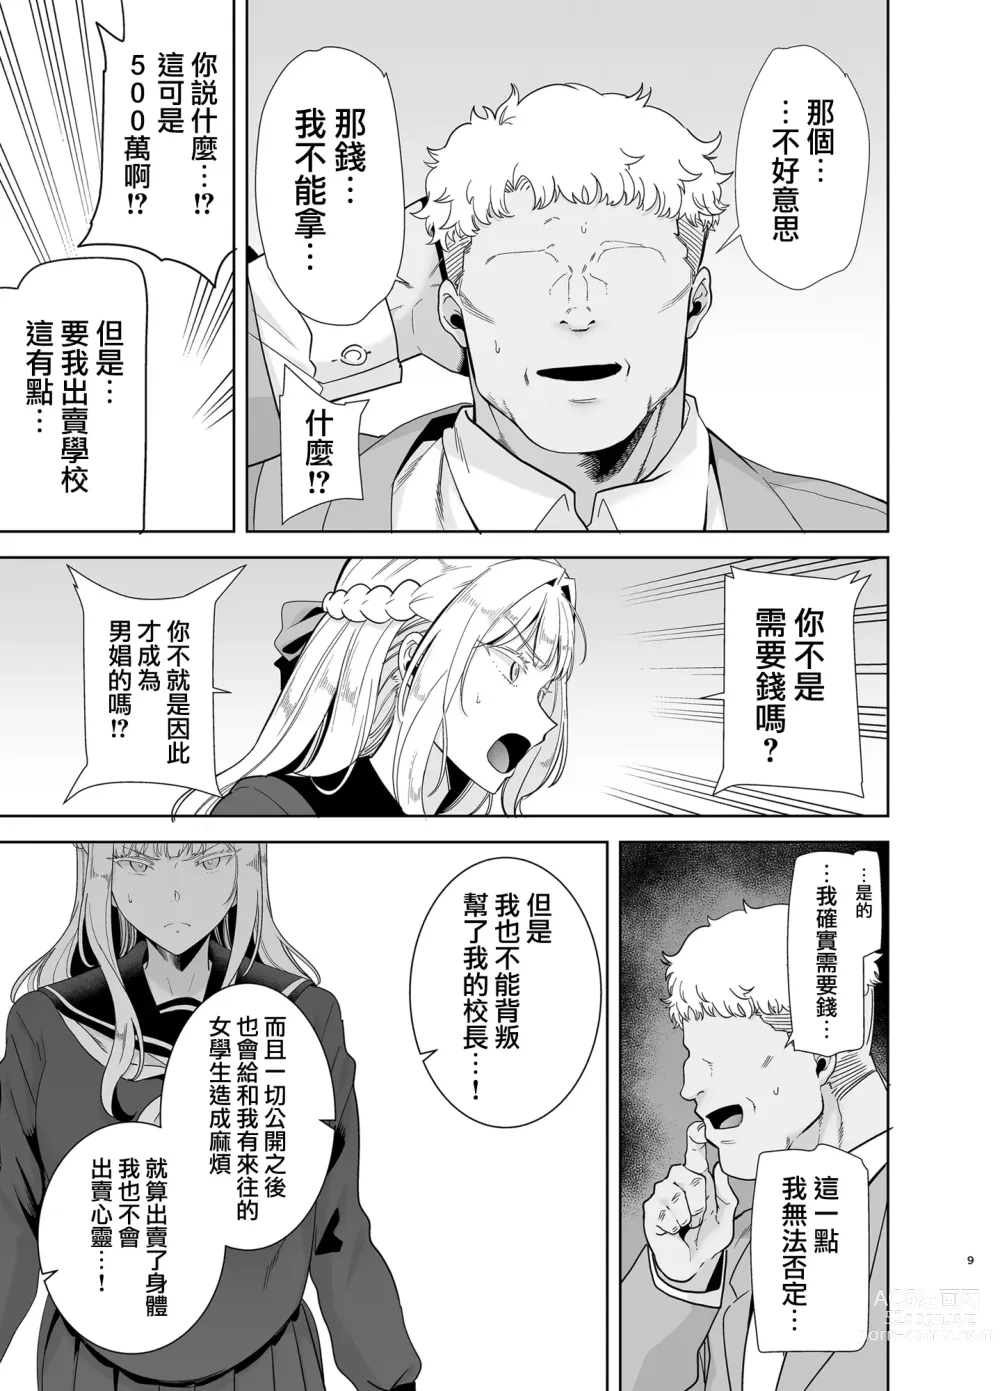 Page 9 of manga 聖華女学院高等部公認竿おじさん 4